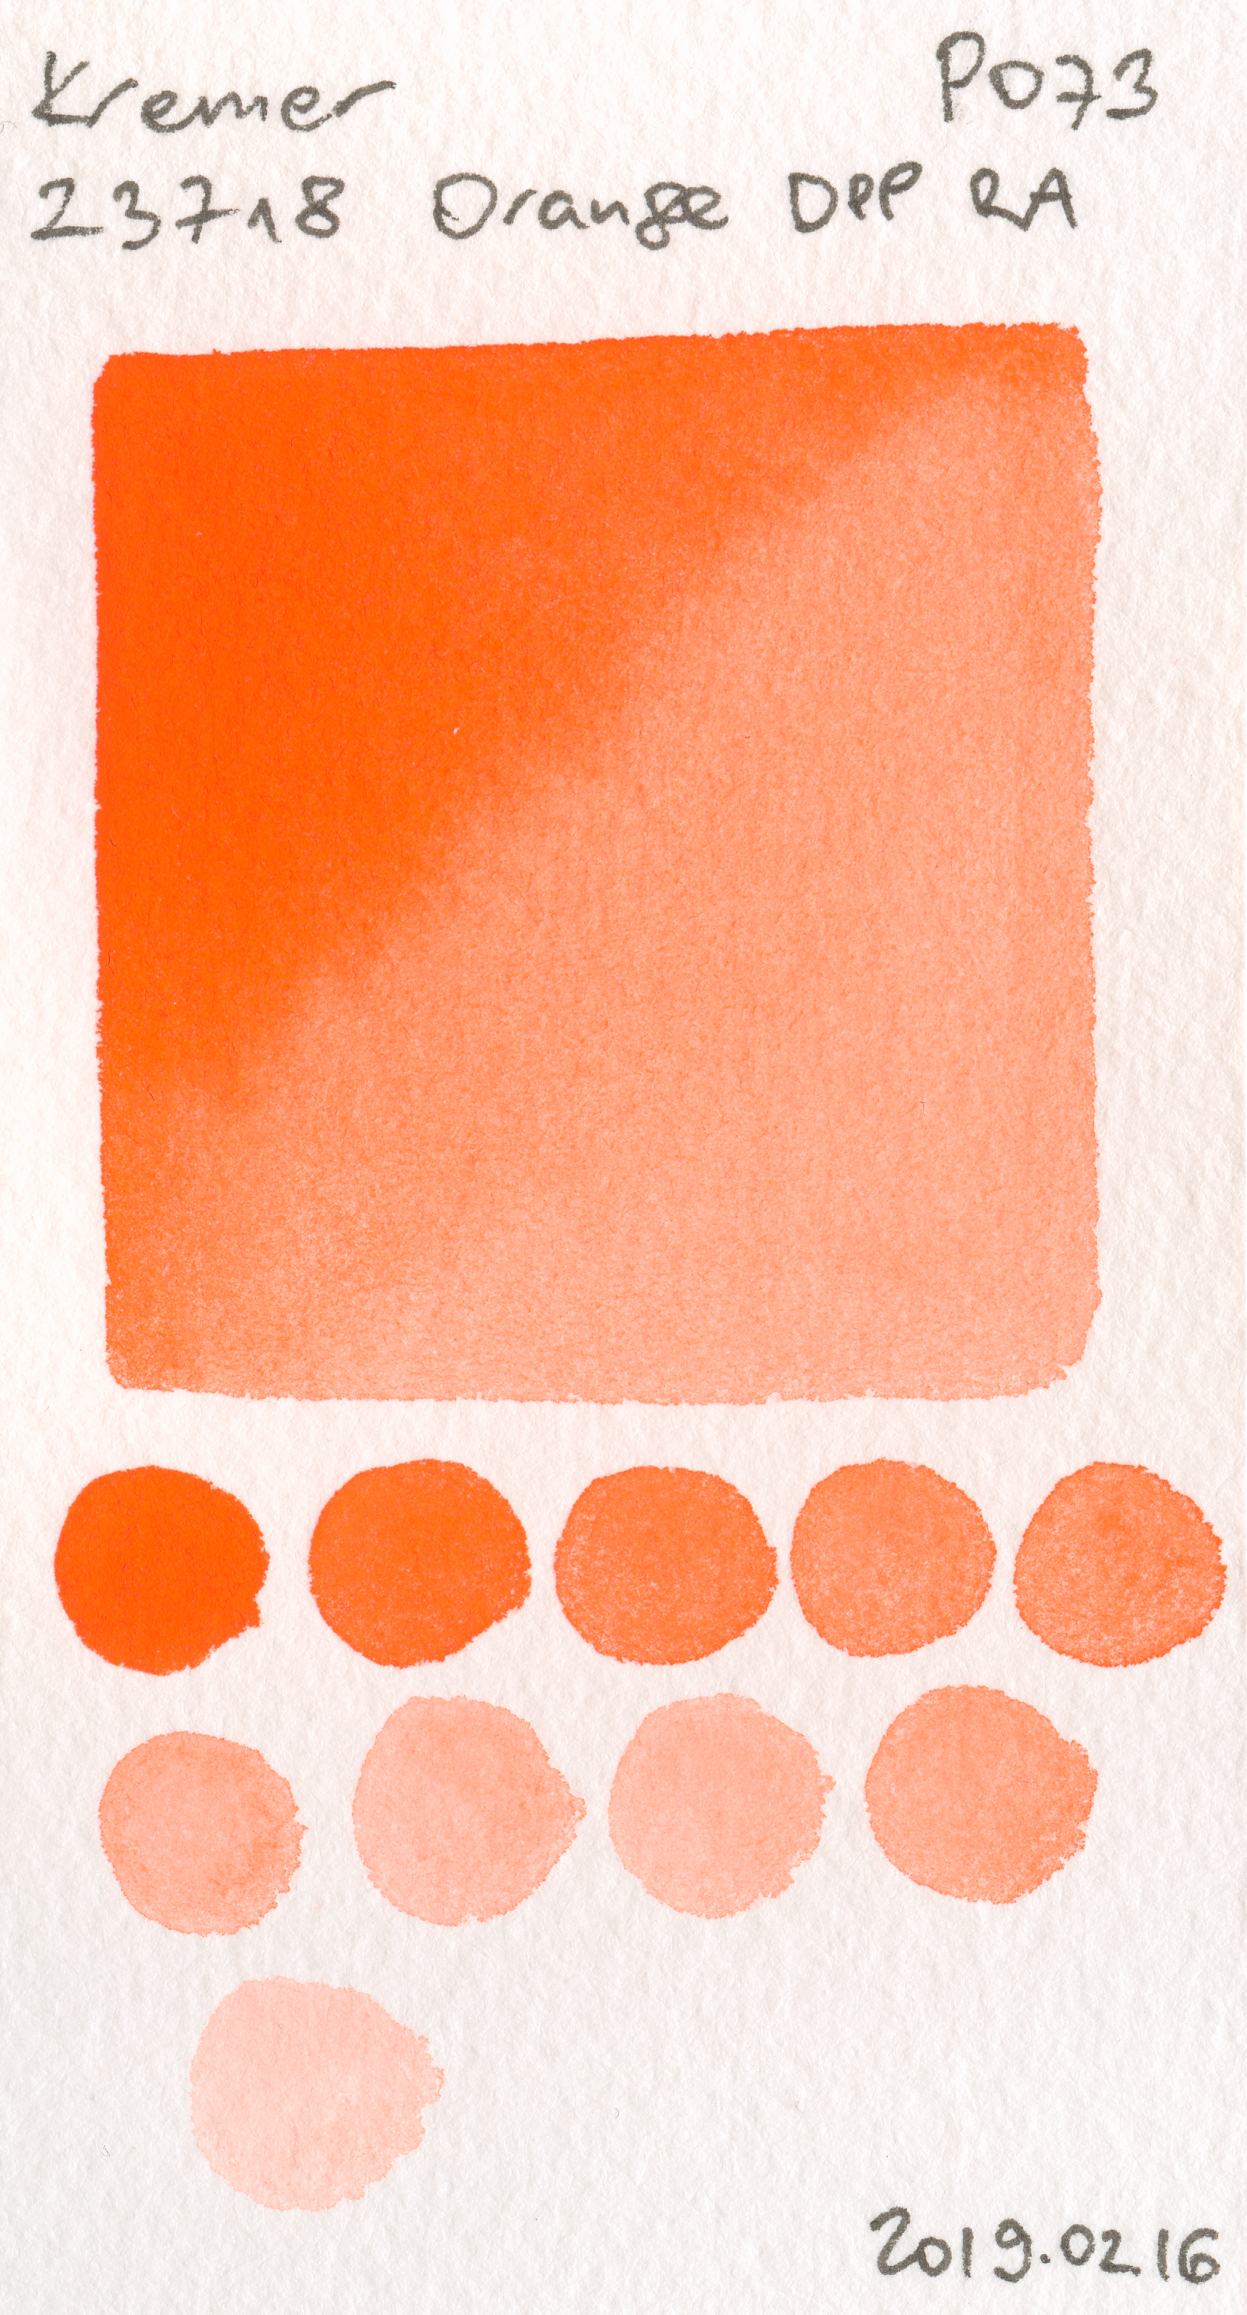 Kremer Pigmente [Dry] Pigments 23178 Orange DPP RA PO73 watercolor swatch